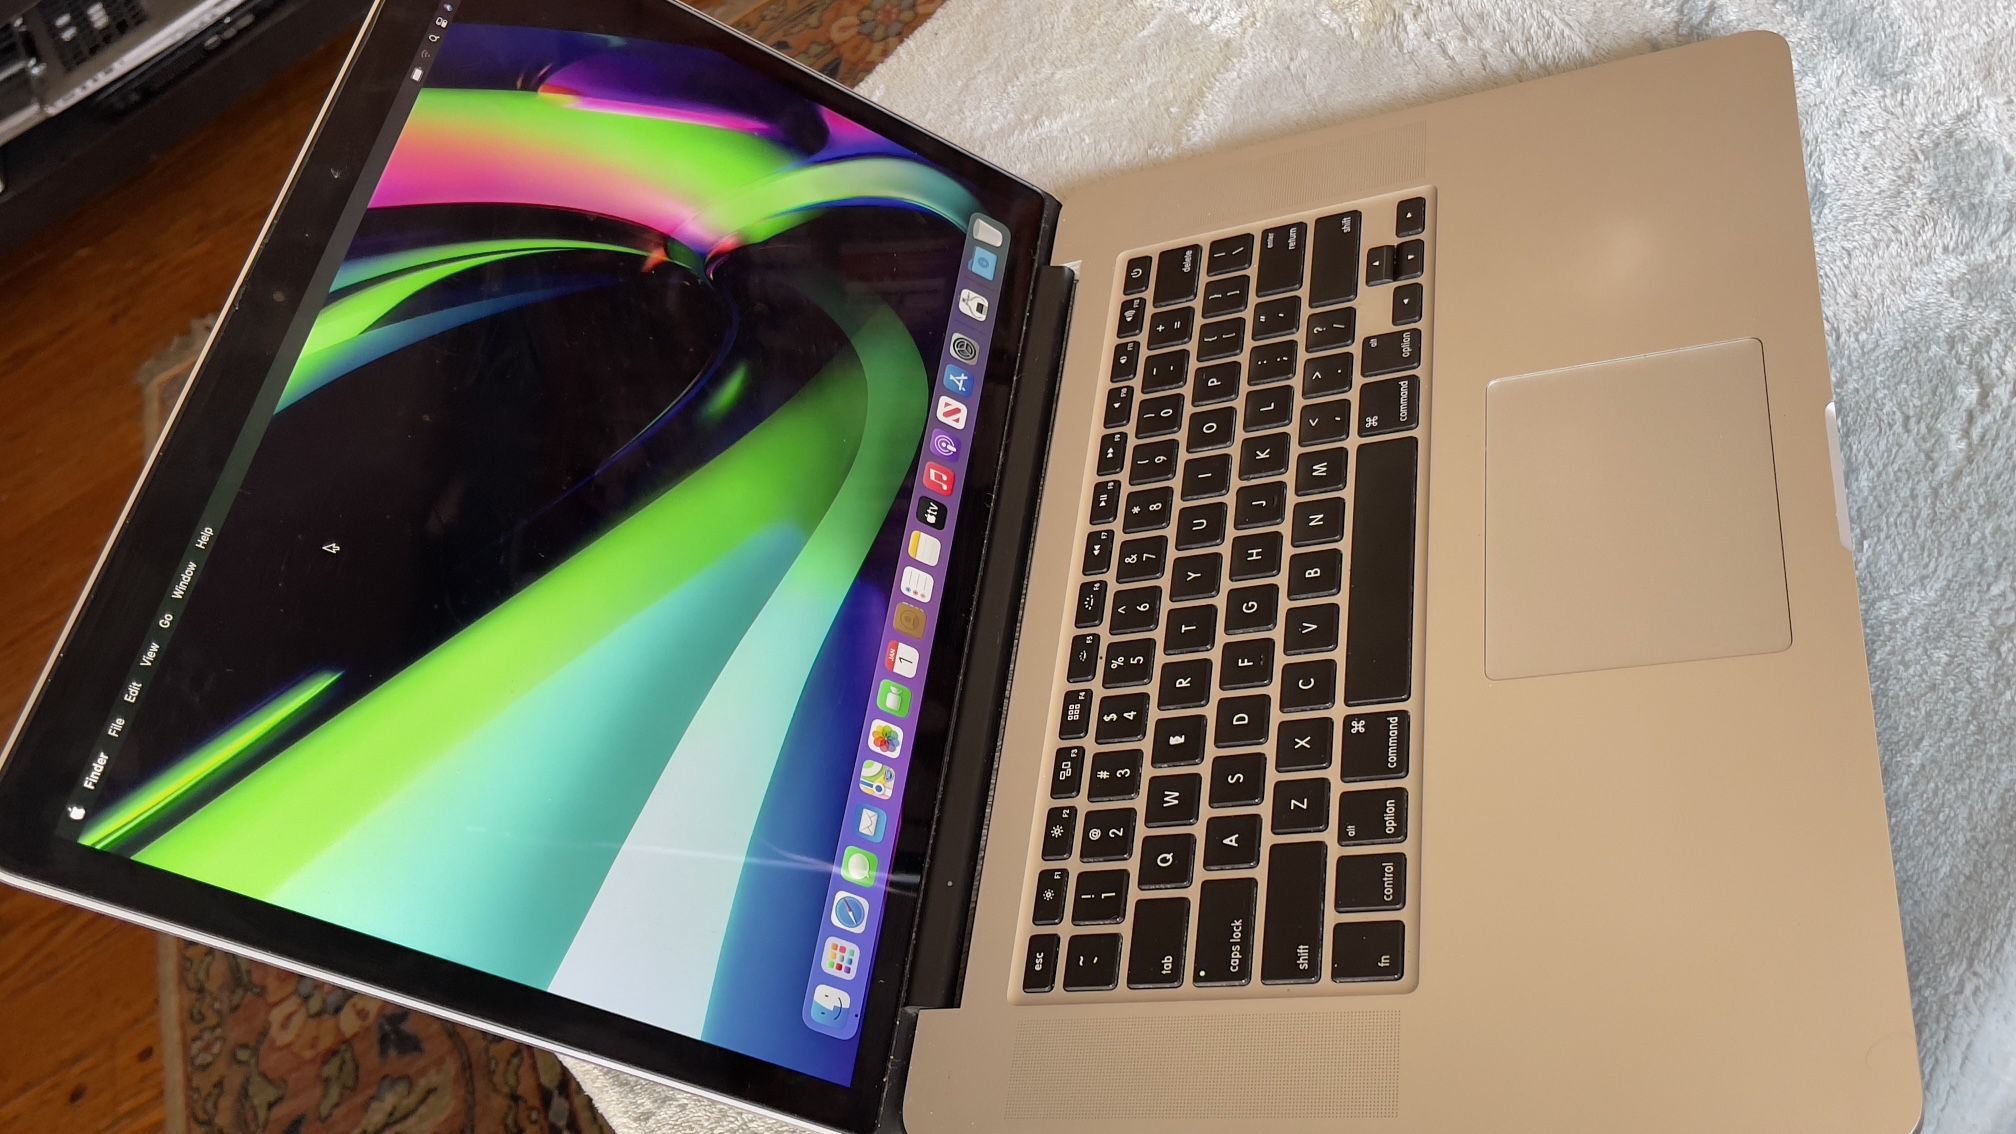 MacBook Pro 15” Retina Core I7; 16GB Ram 256GB SSD $375